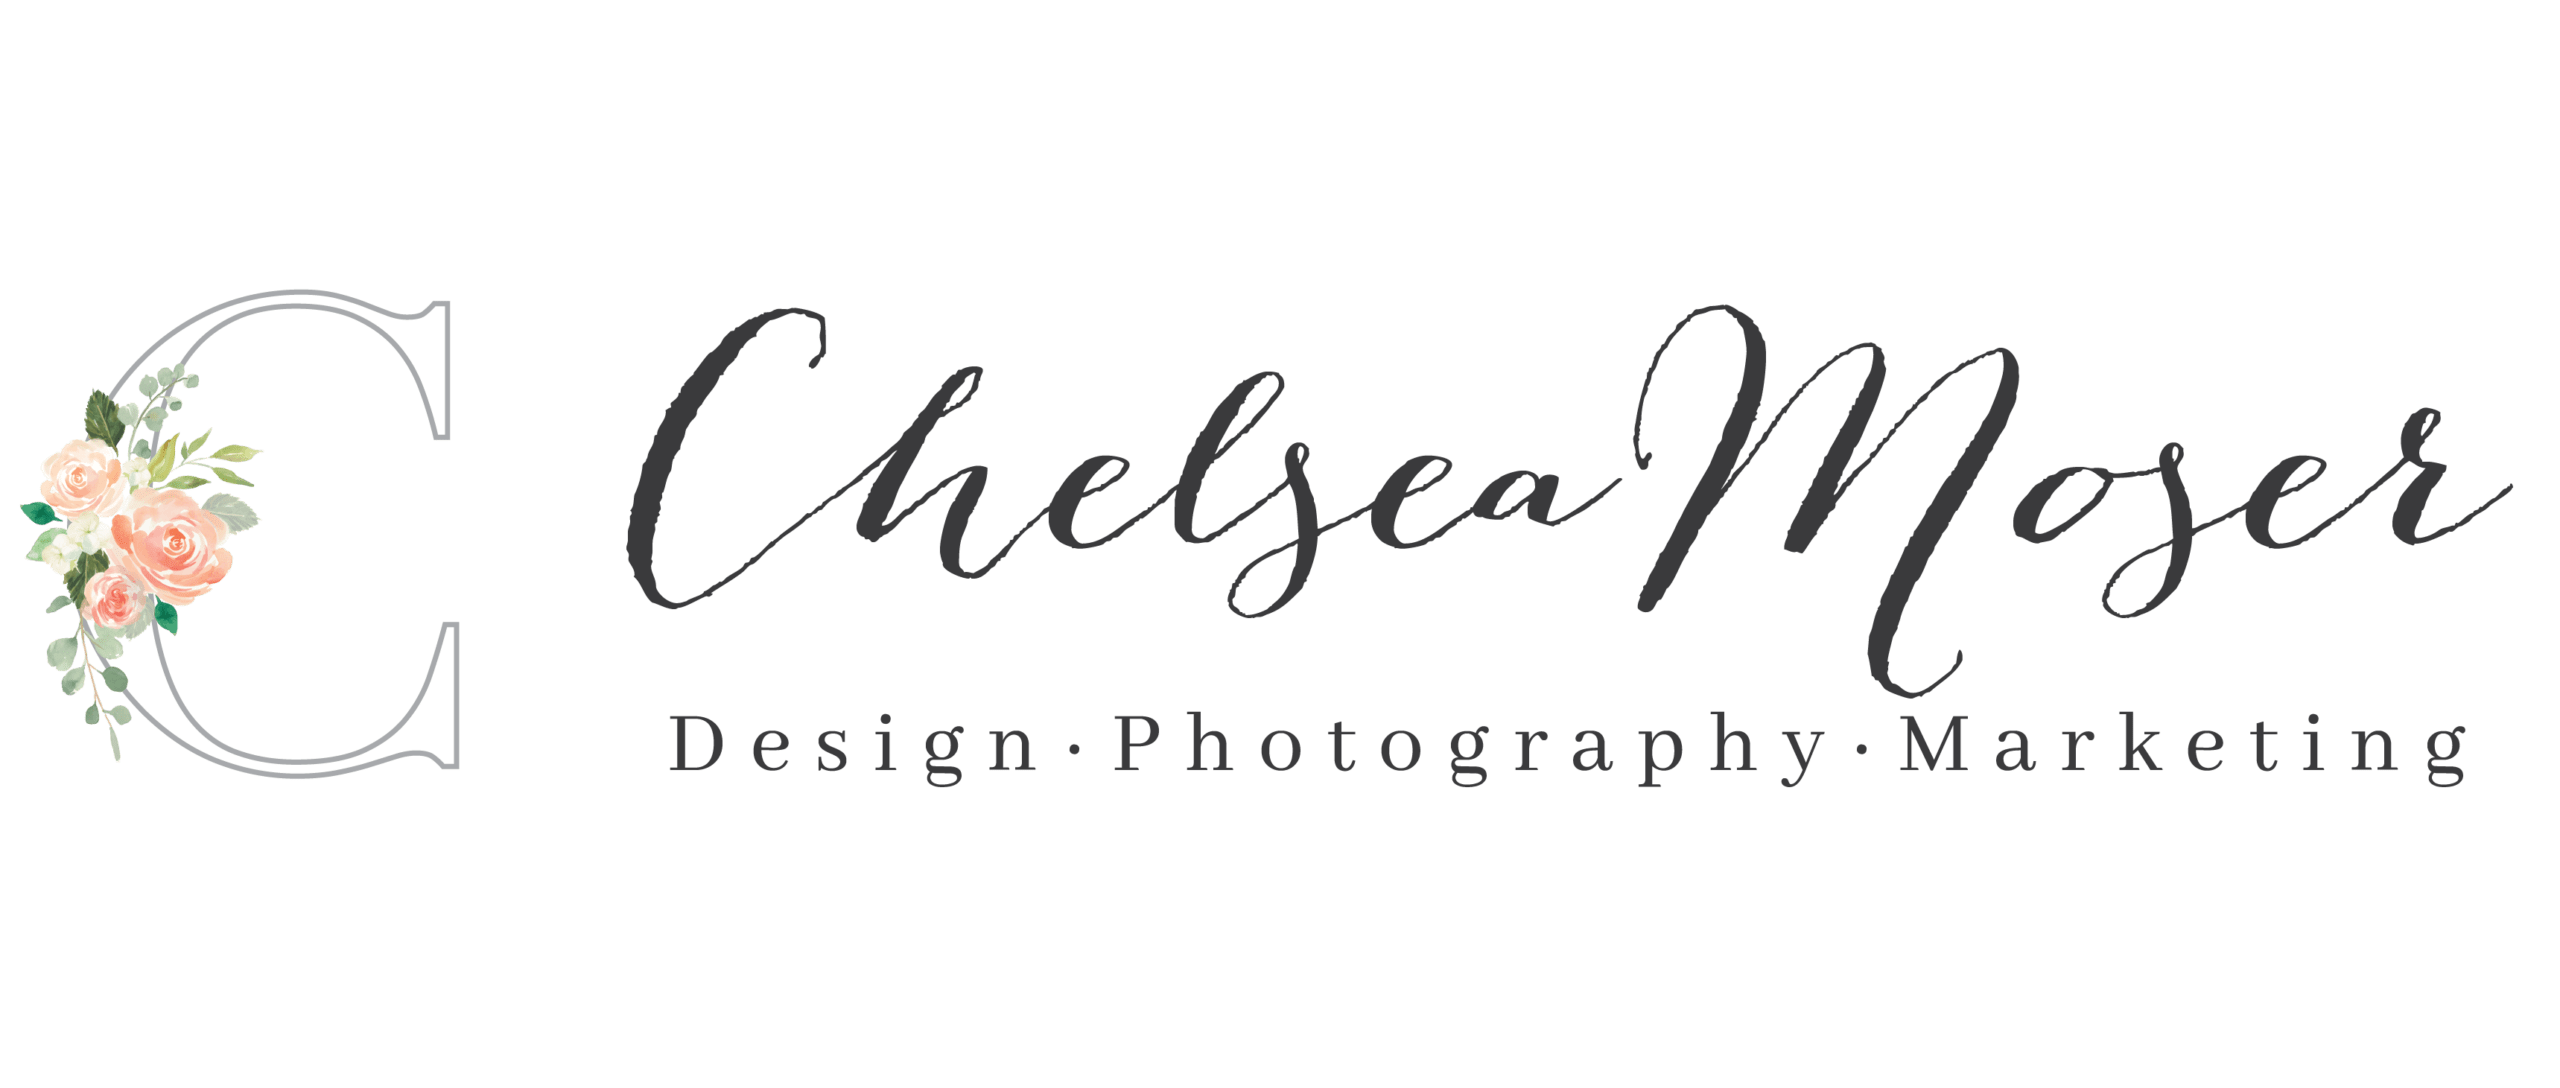 Chelsea Moser Designs